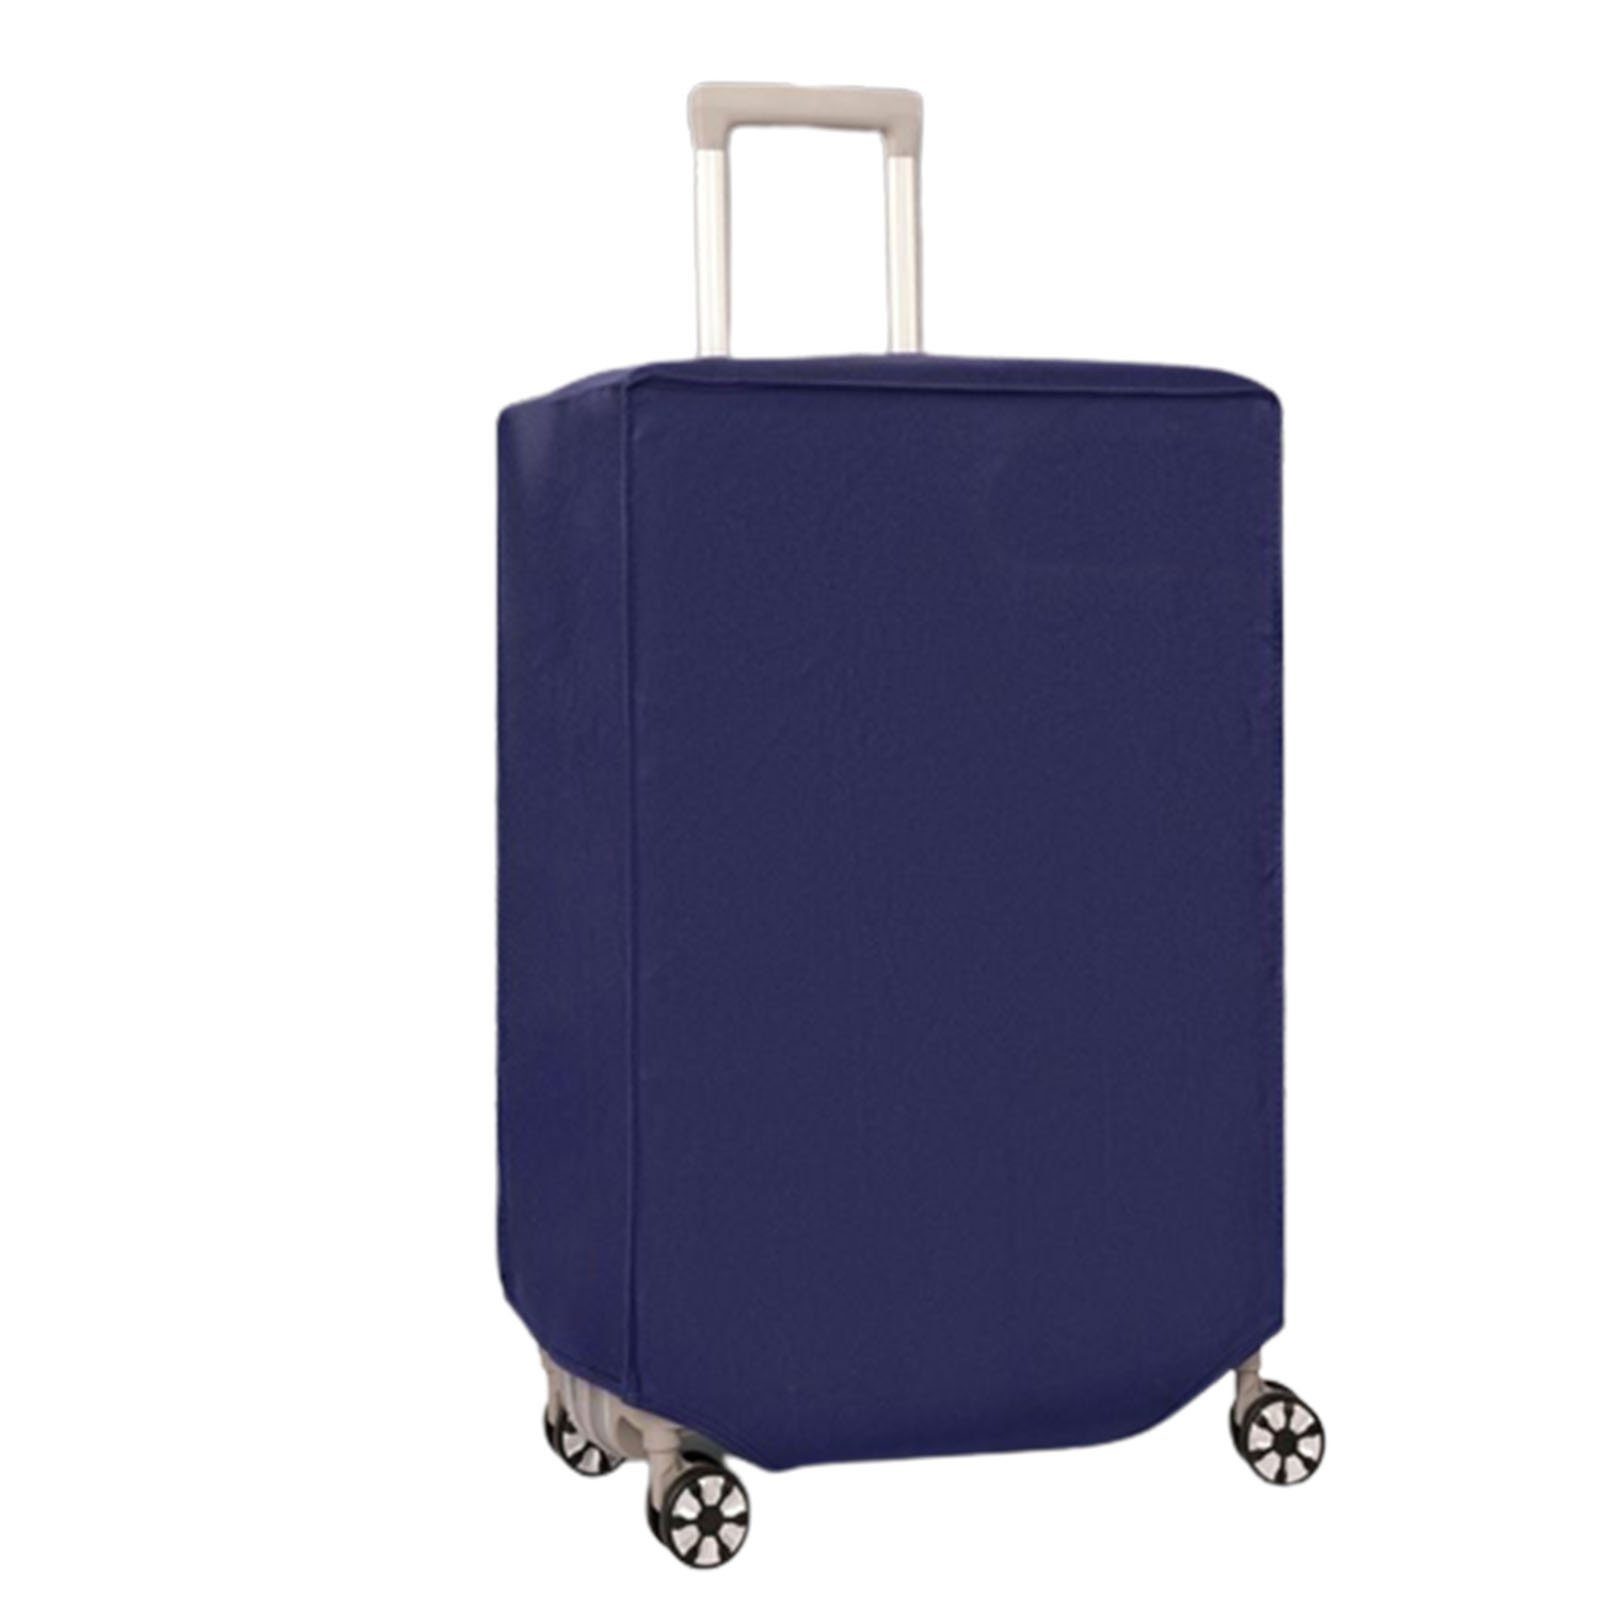 Blusmart Kofferhülle Vlies-Gepäckabdeckung, blue2 Kofferschutz Verschleißfest, Kratzfest